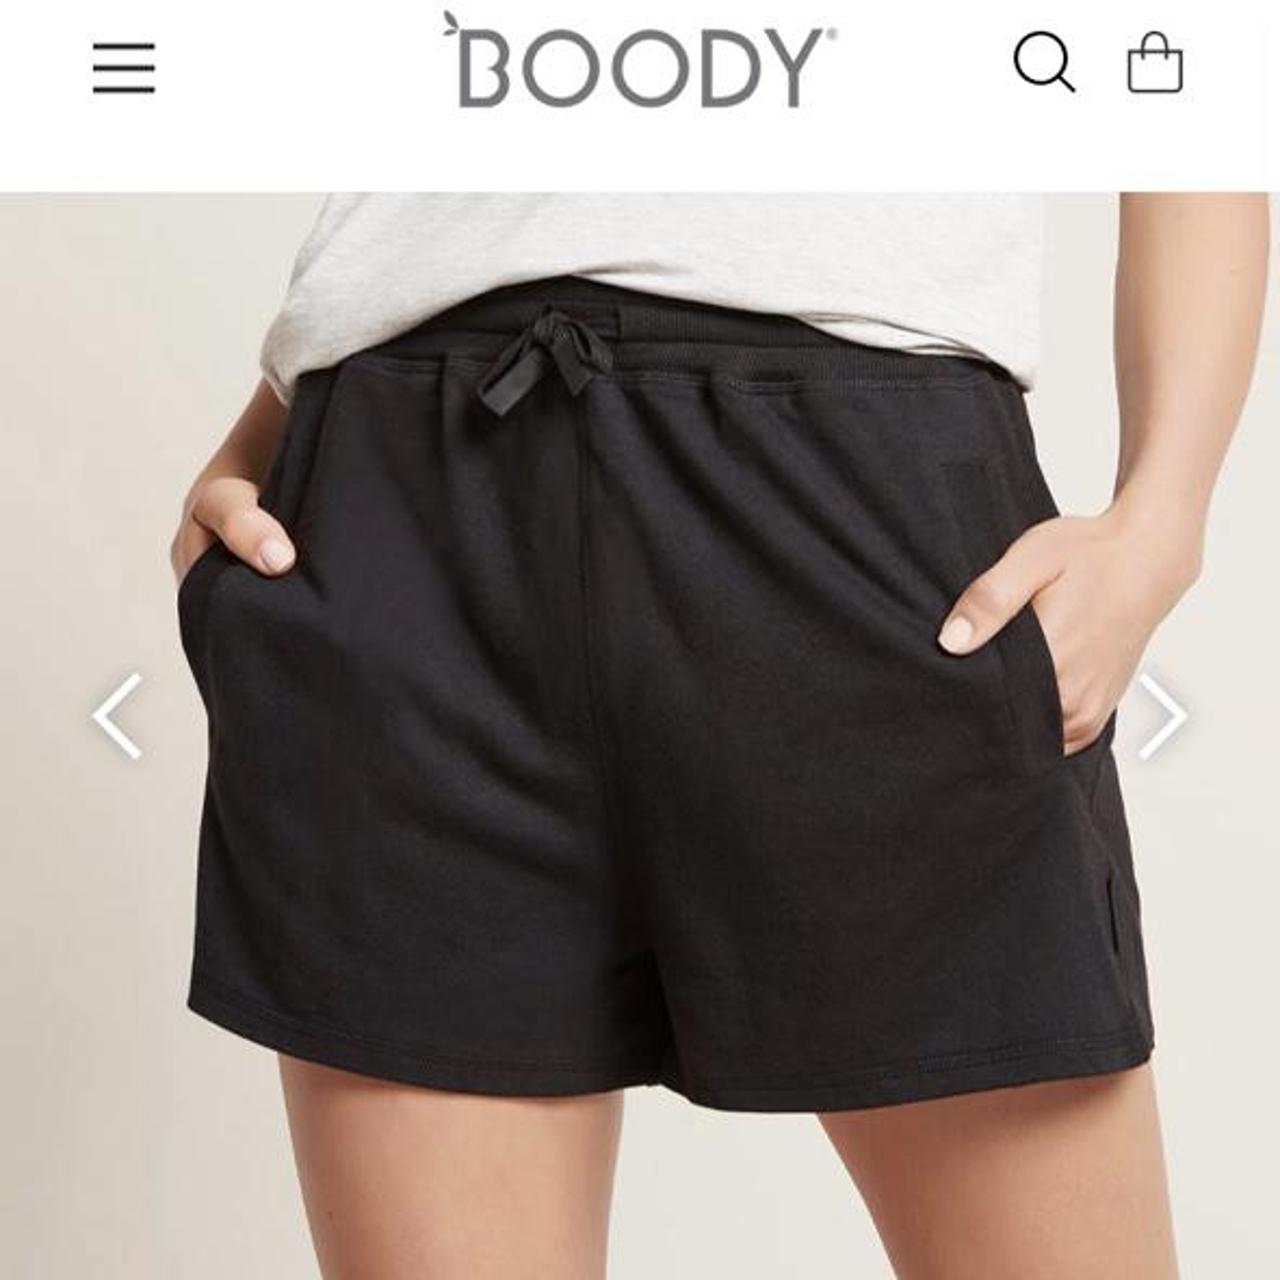 Boody Women's Black Shorts (4)